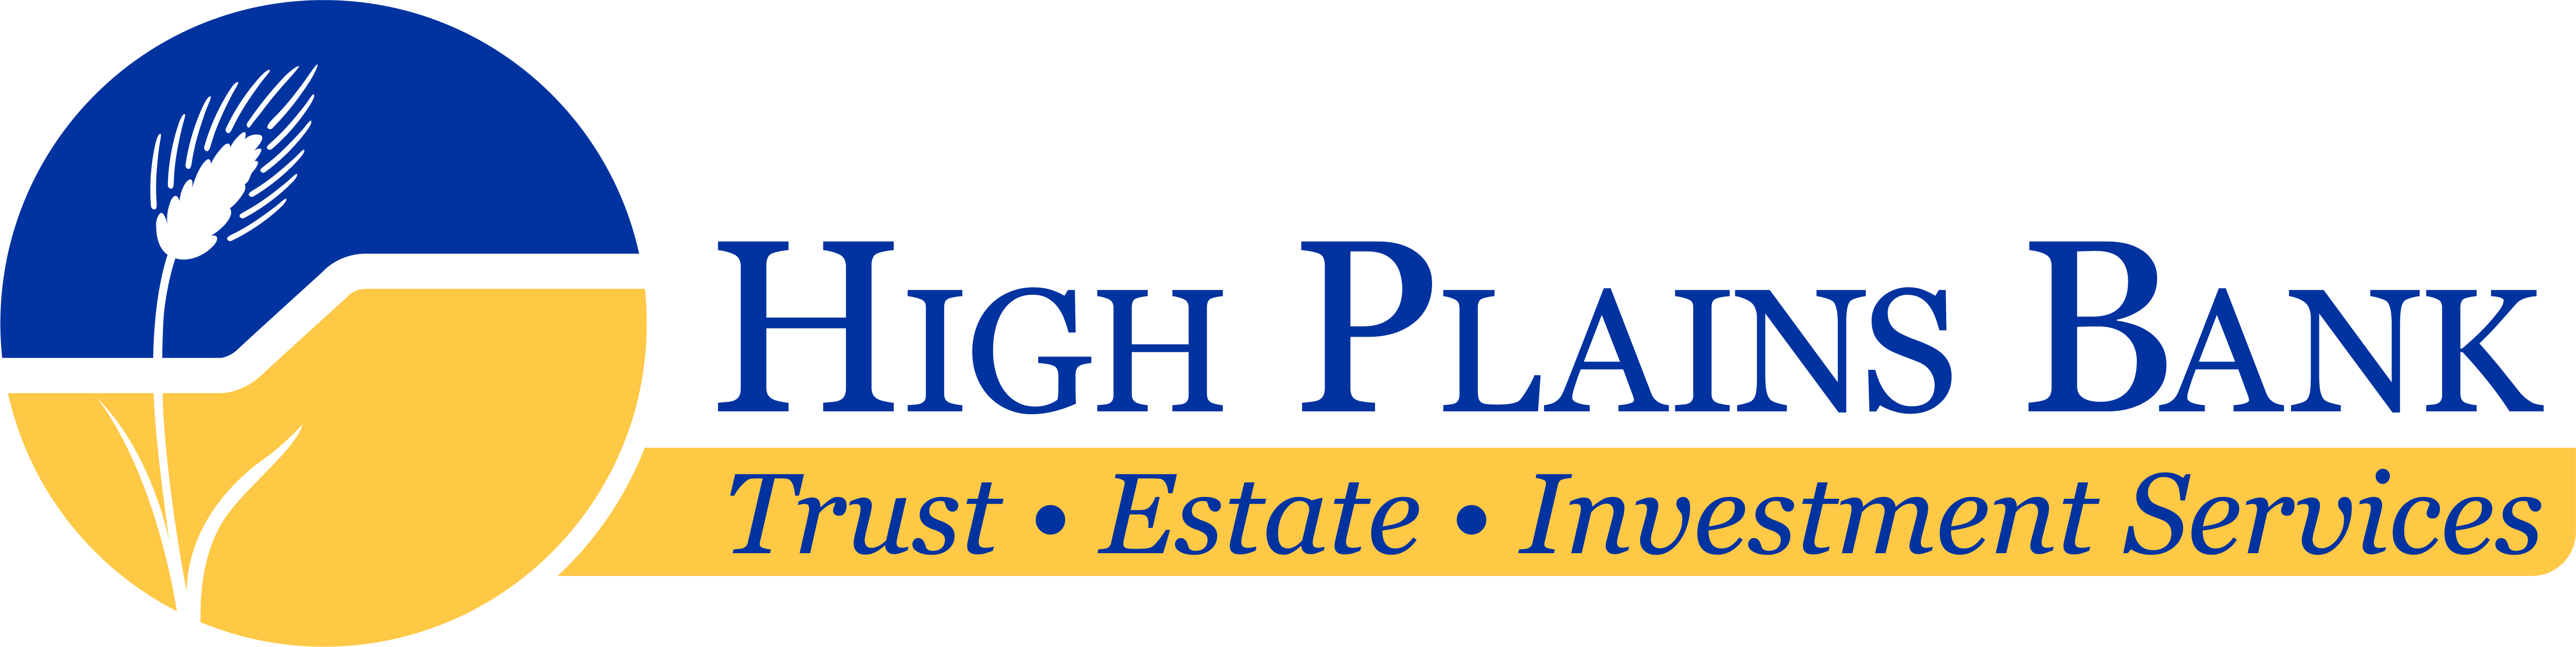 High Plains Bank Trust, Estate, Investment Services logo